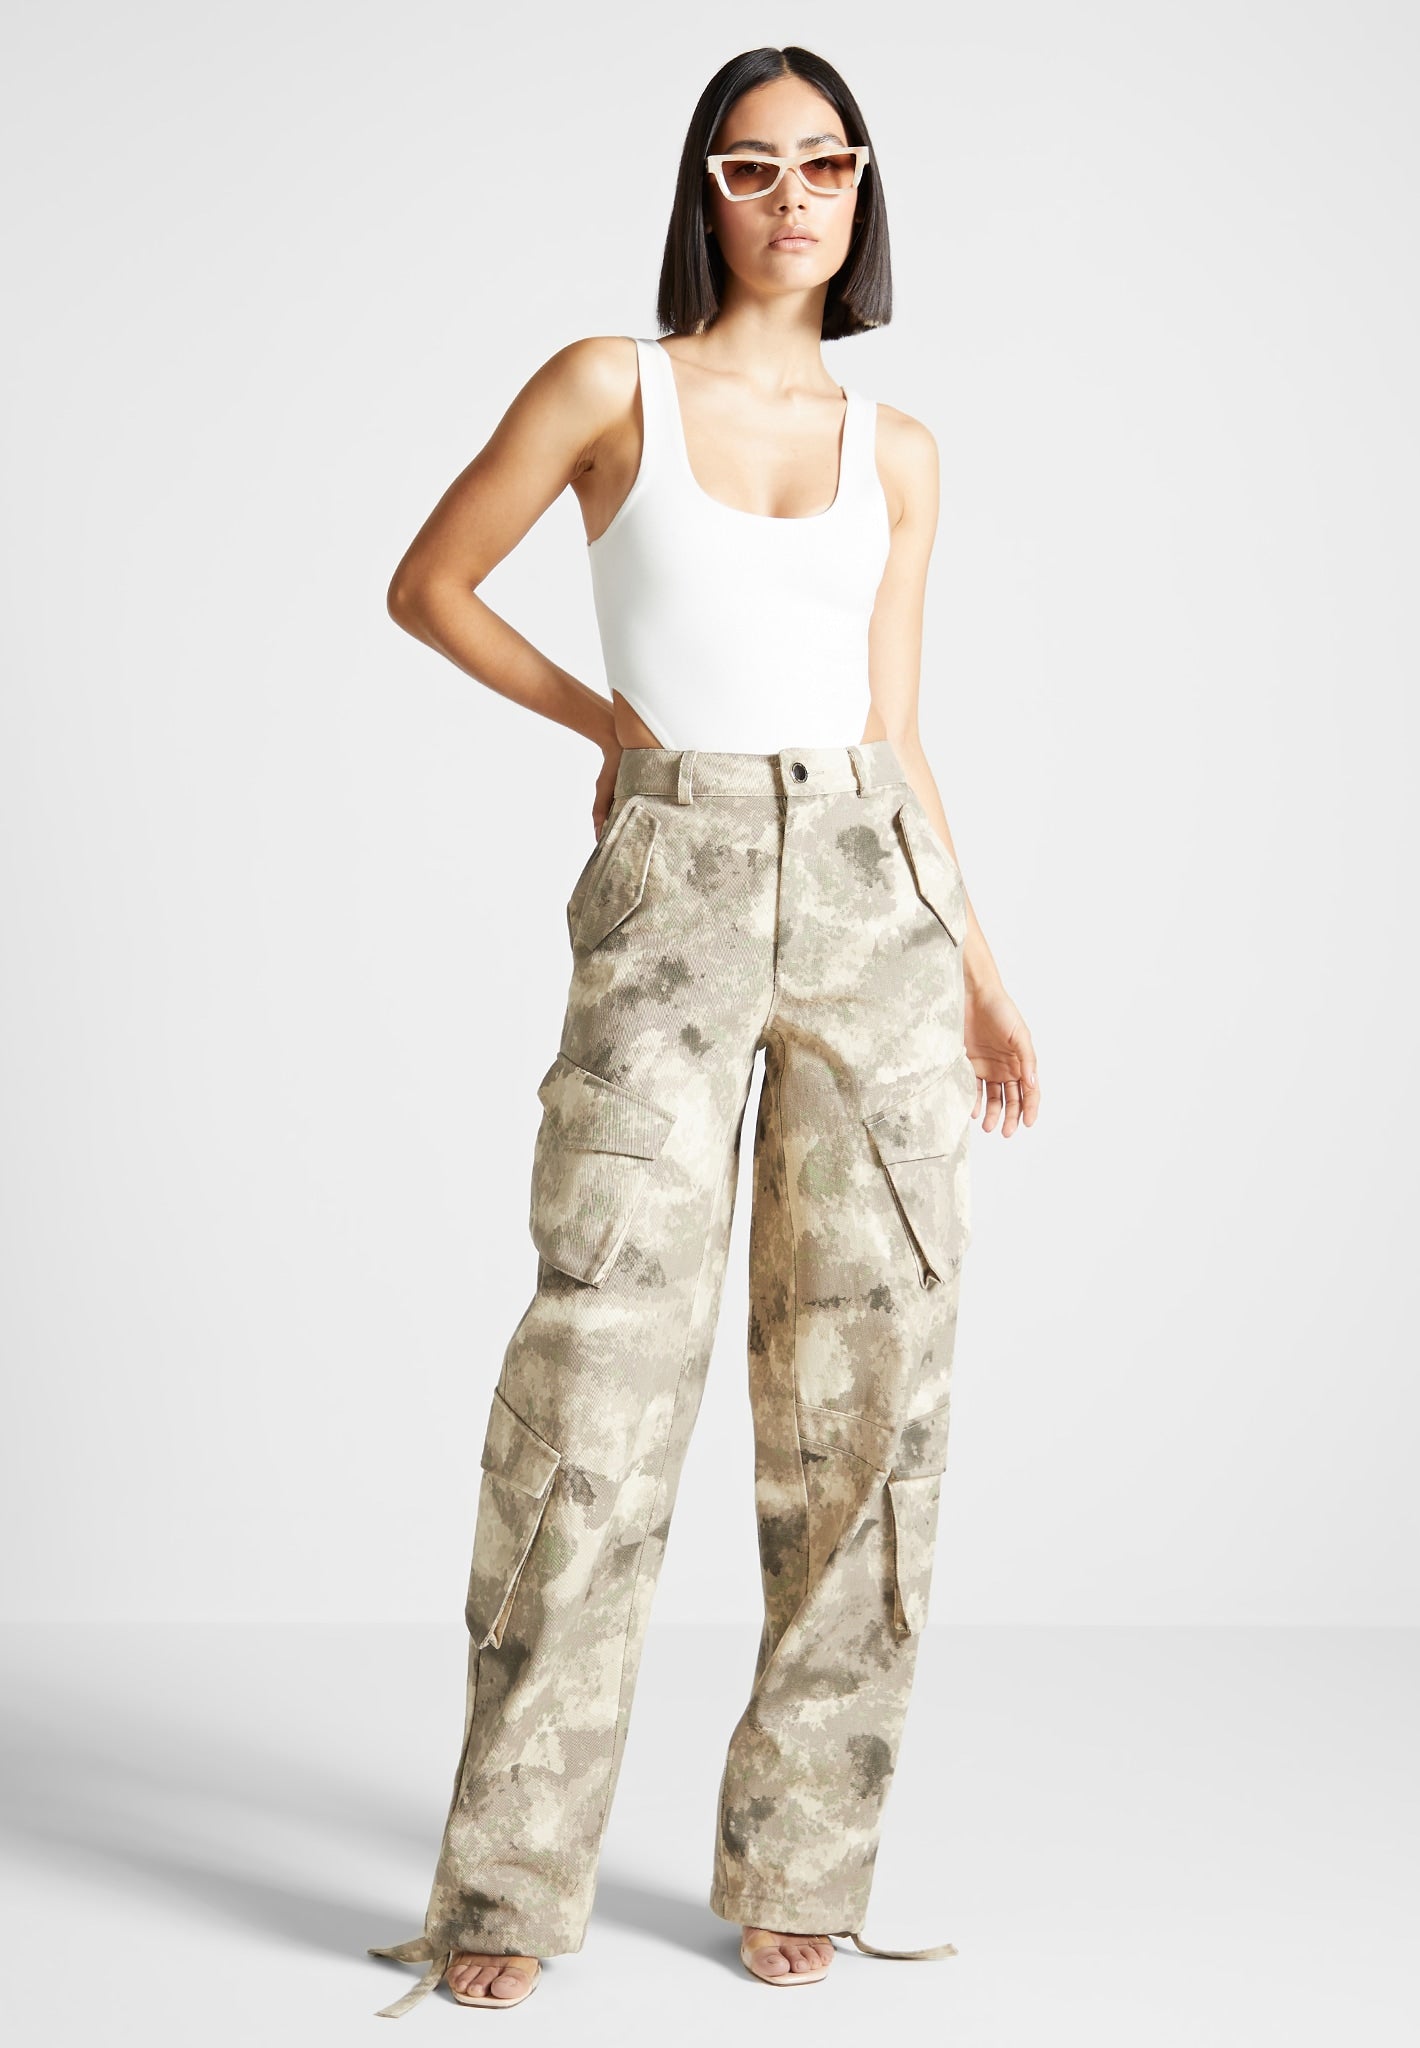 Camo Yoga Pants  Womens Camouflage Pants  What Devotion  Coolest  Online Fashion Trends